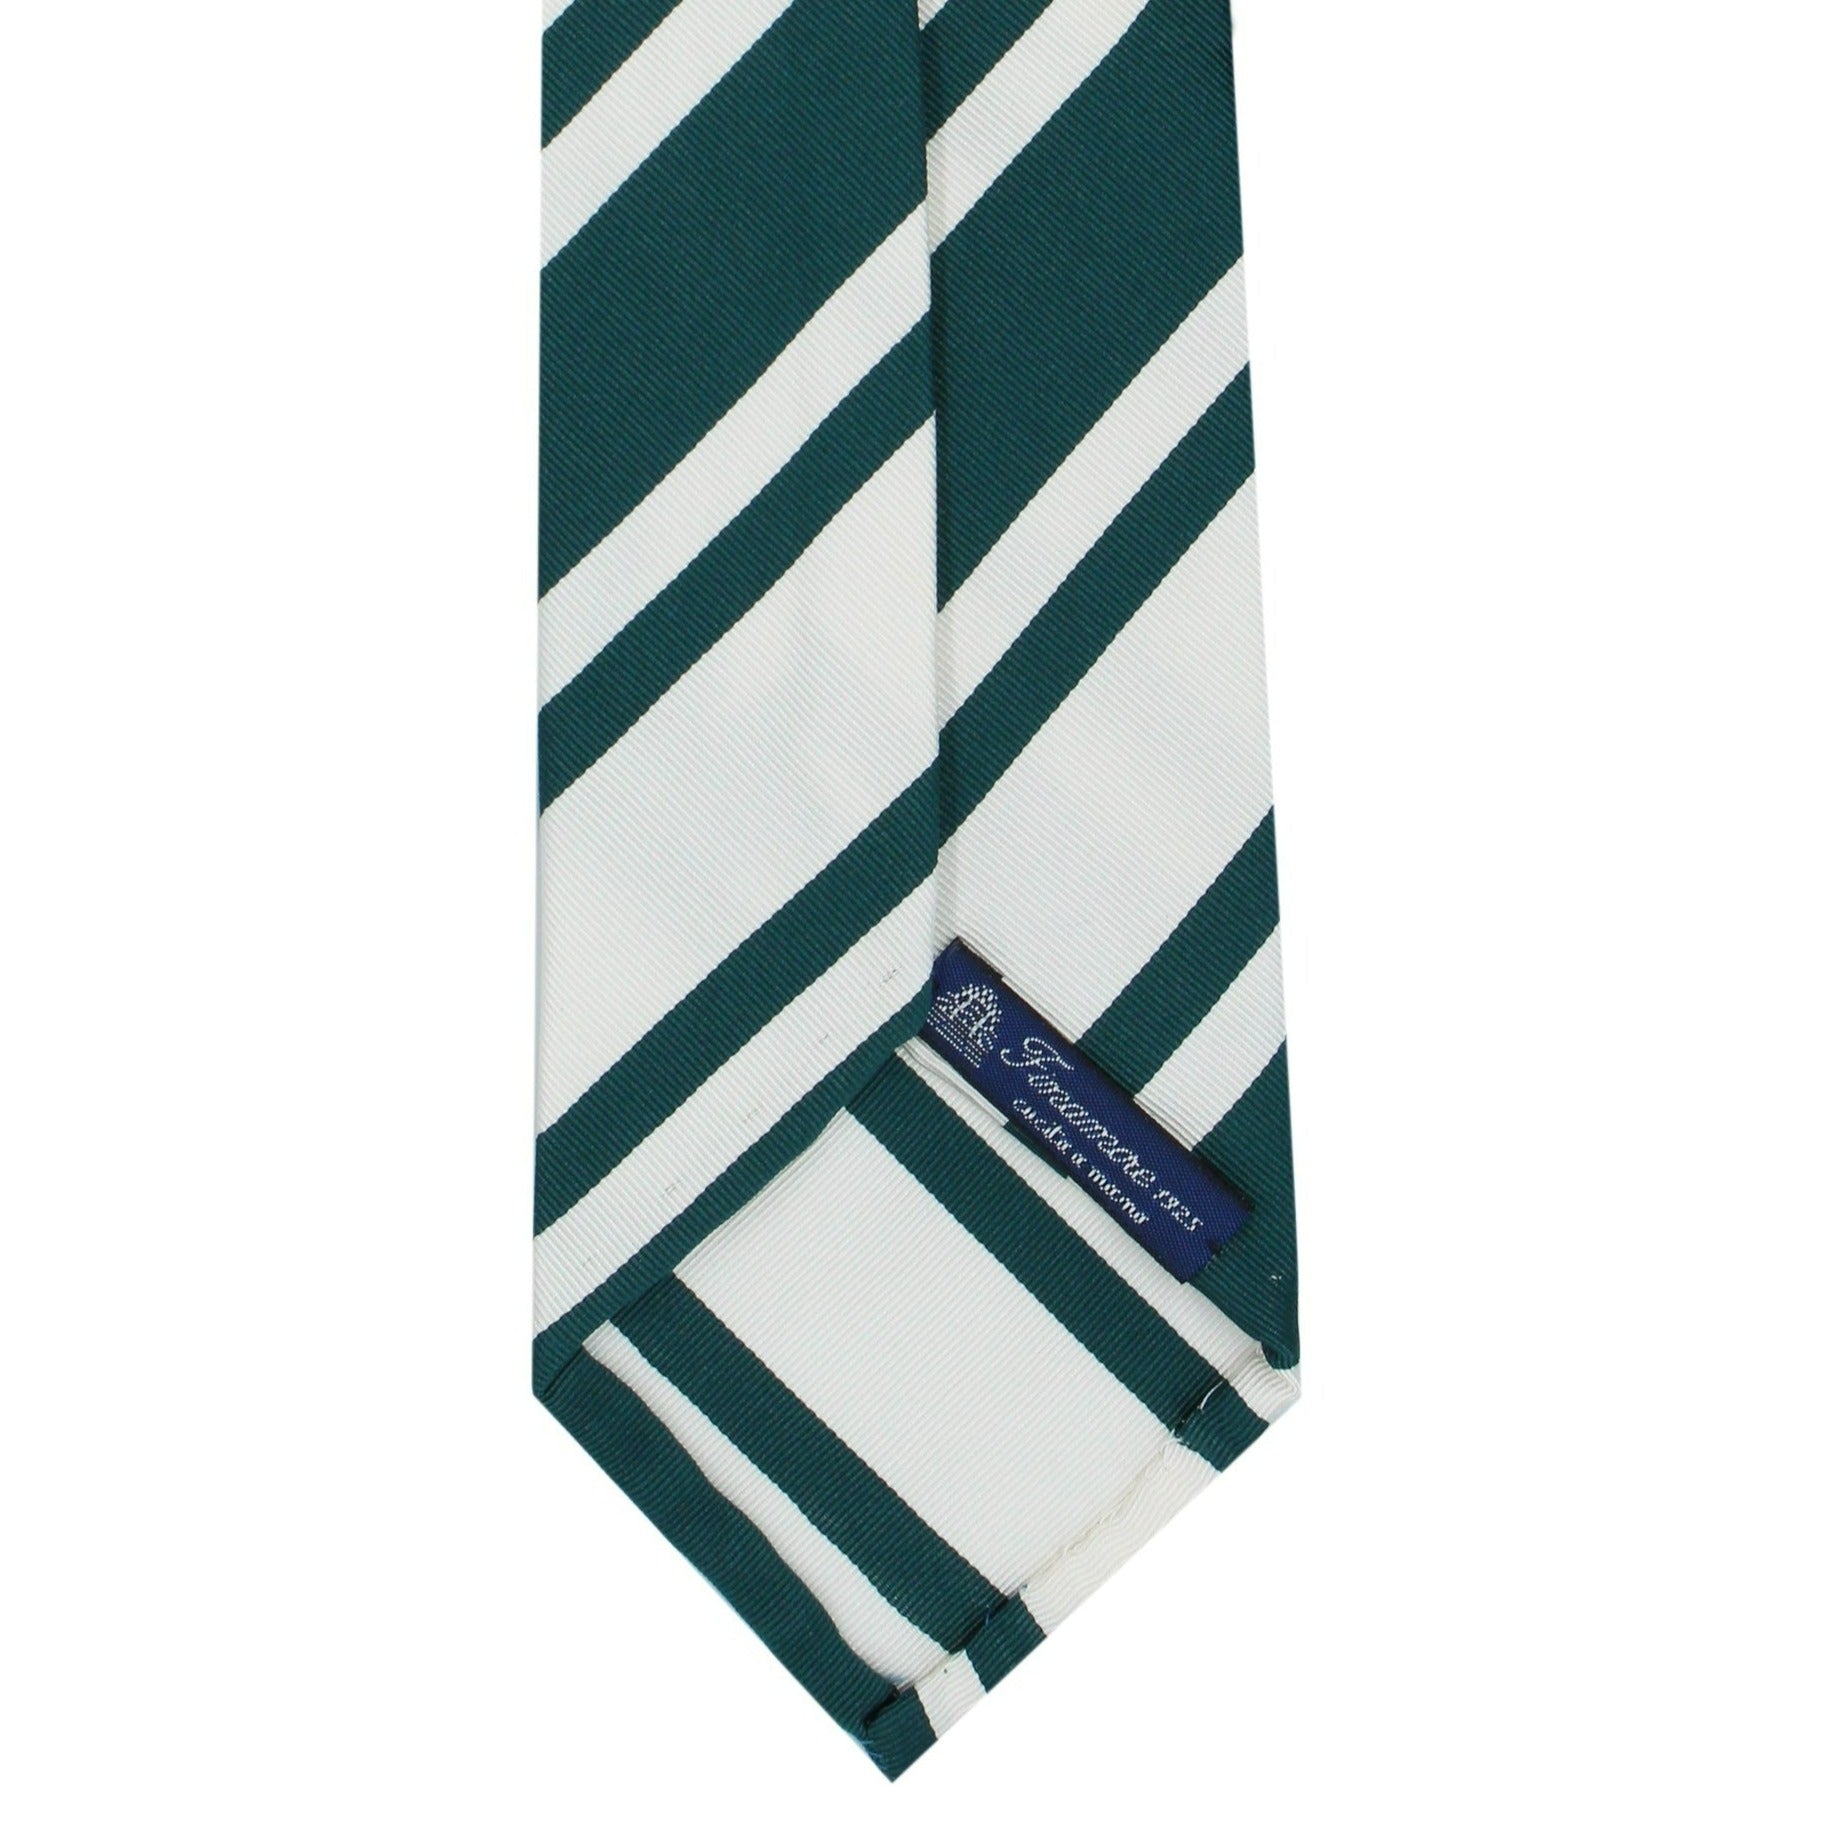 Anversa silk and cotton tie white background green bands